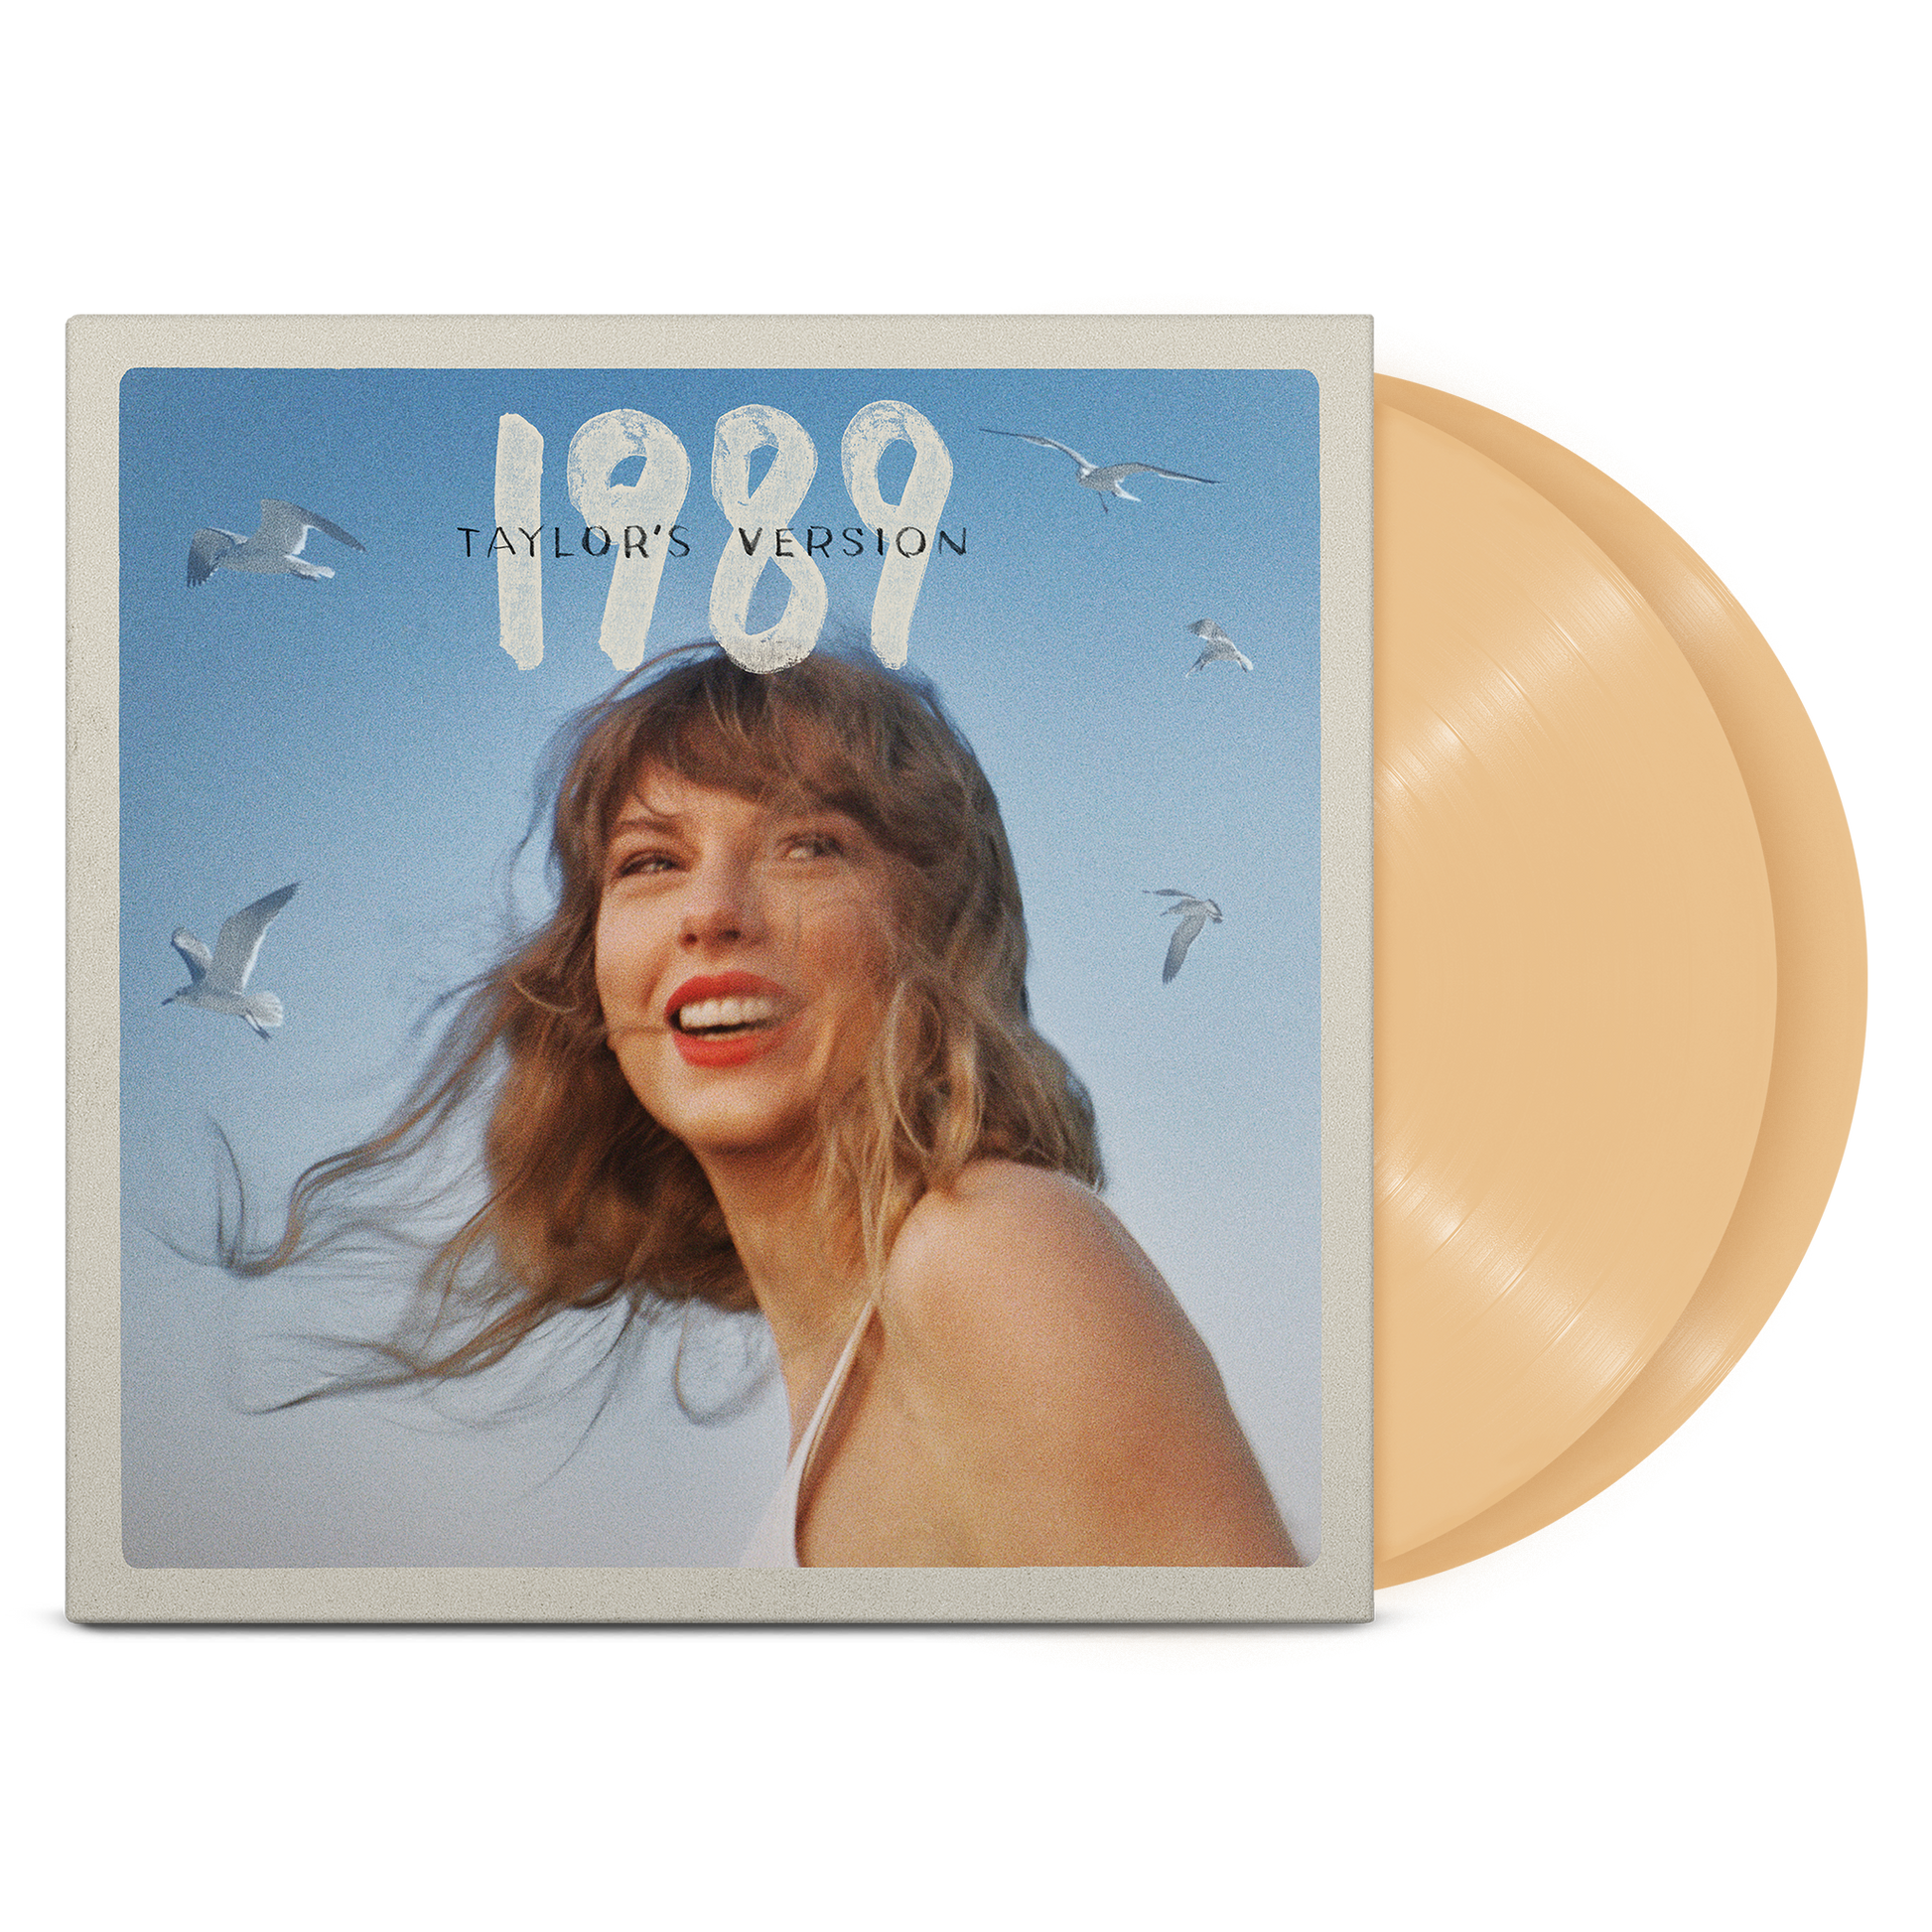 Taylor Swift - Taylor Swift CD – RepDiscosPeru